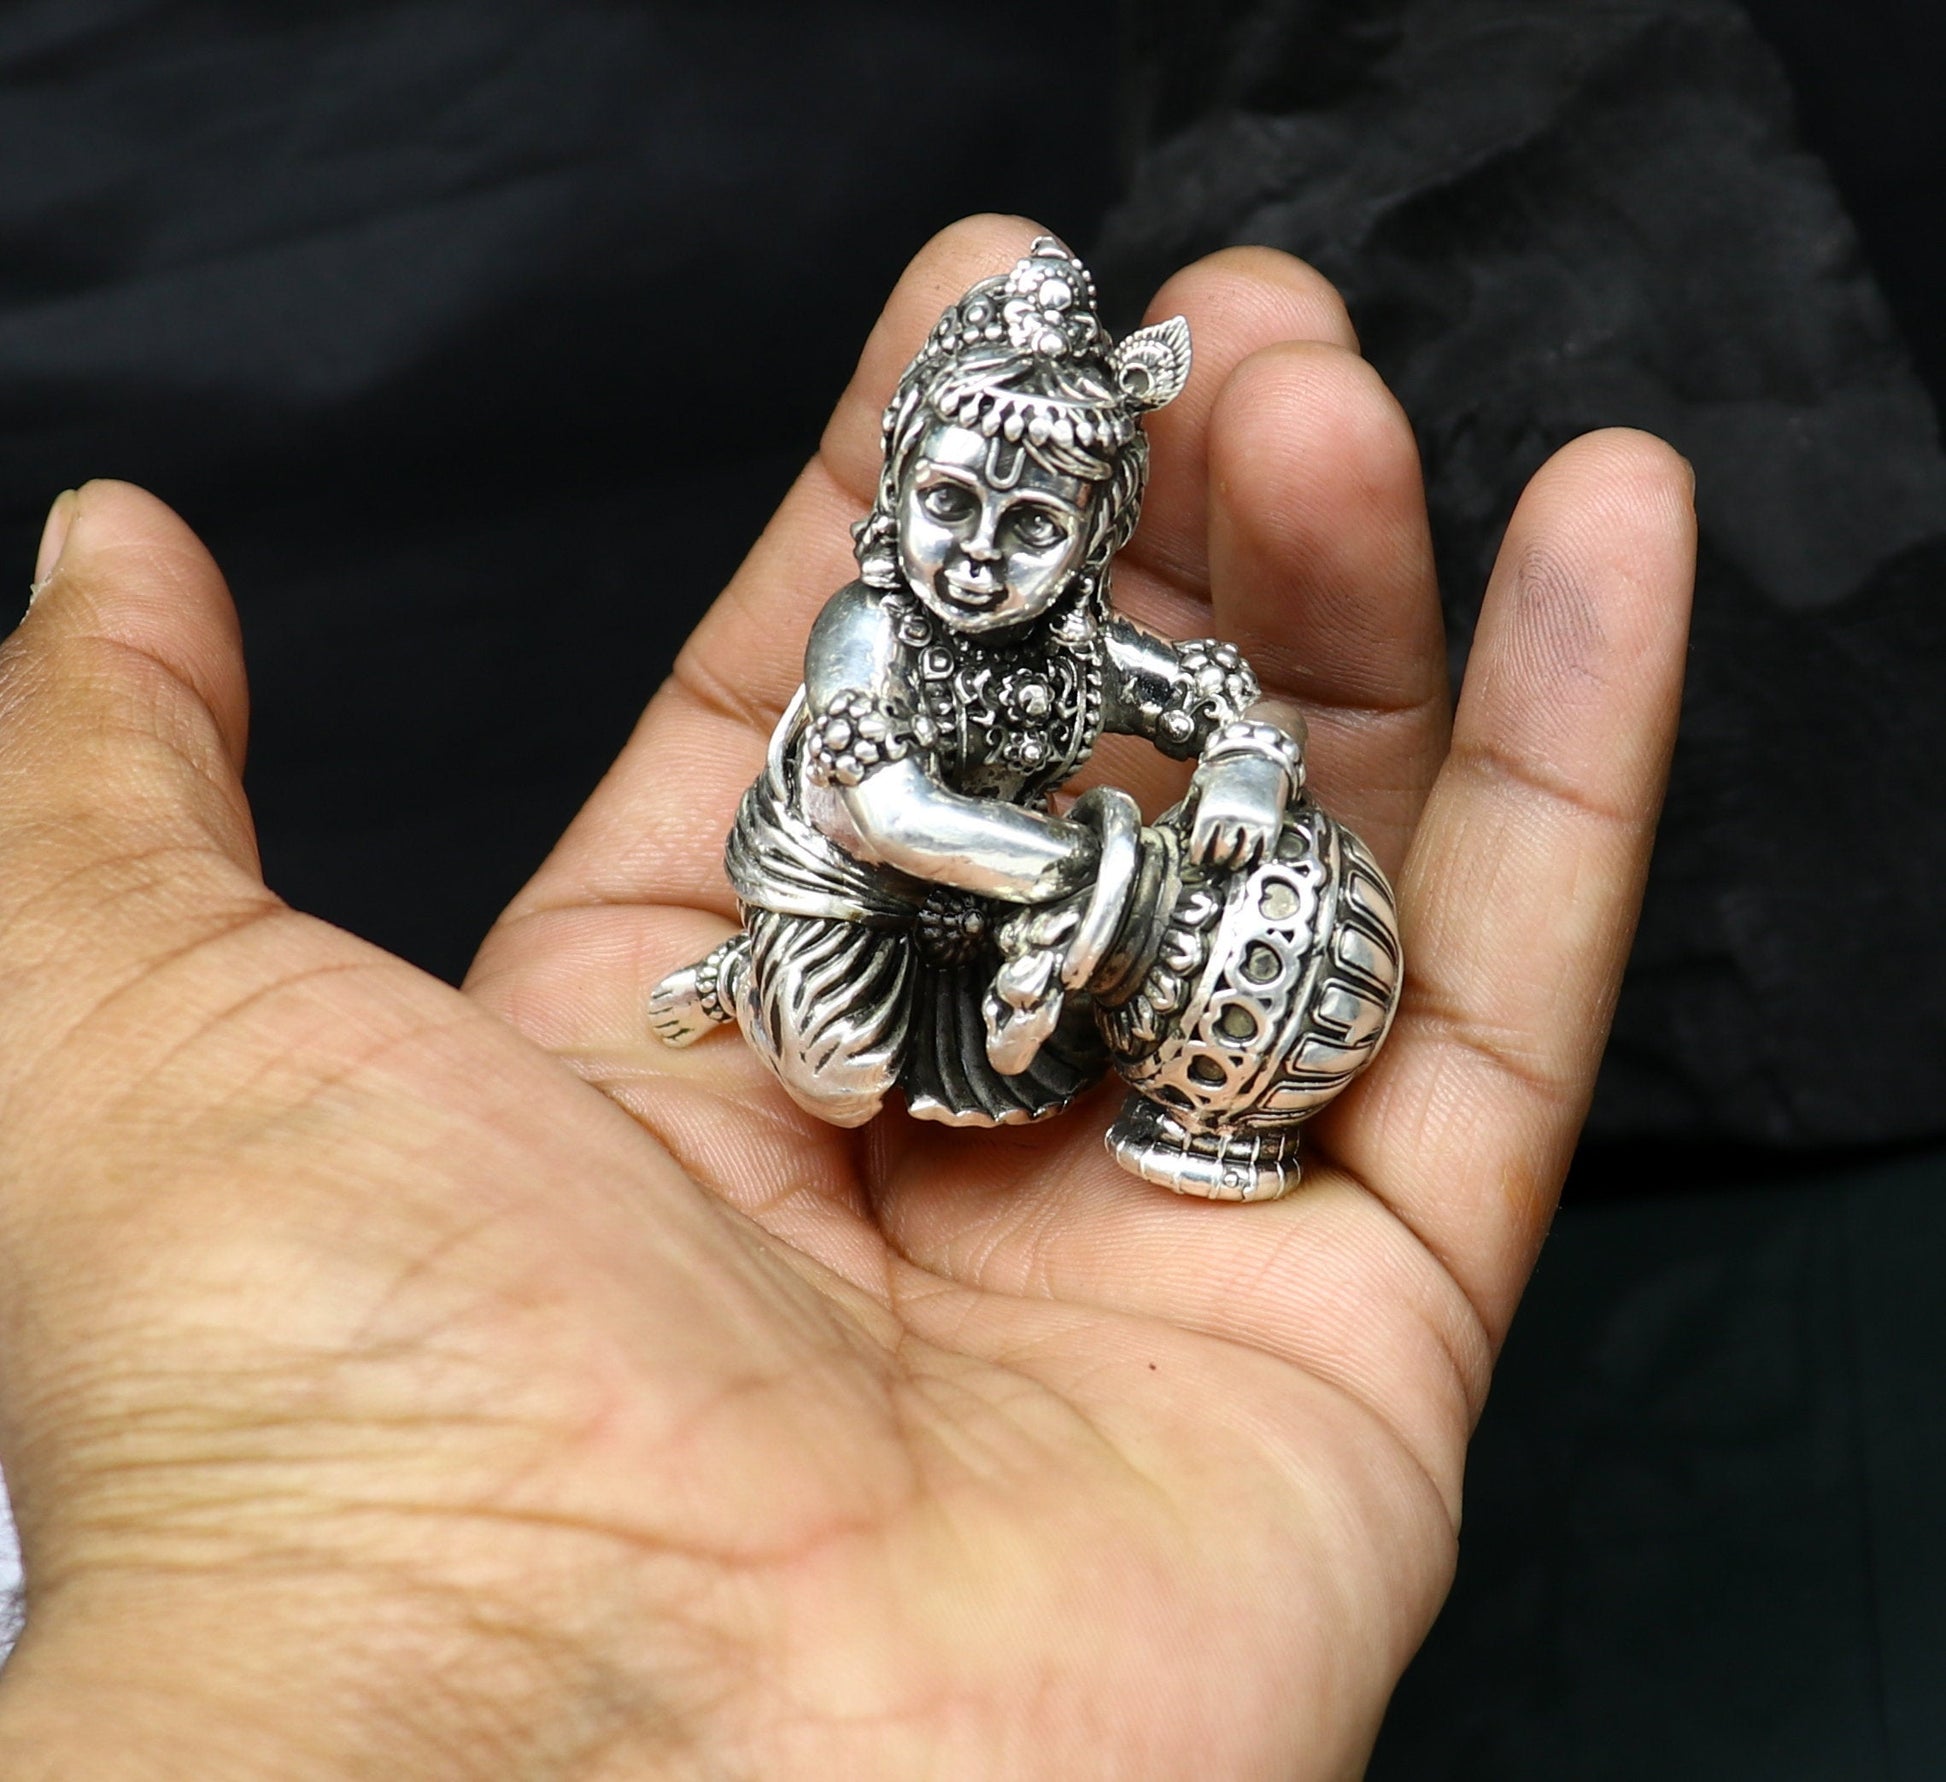 925 Sterling silver customized Idol Krishna Bal Gopal statue figurine, laddu gopal sculpture home temple utensil, silver article su85 - TRIBAL ORNAMENTS